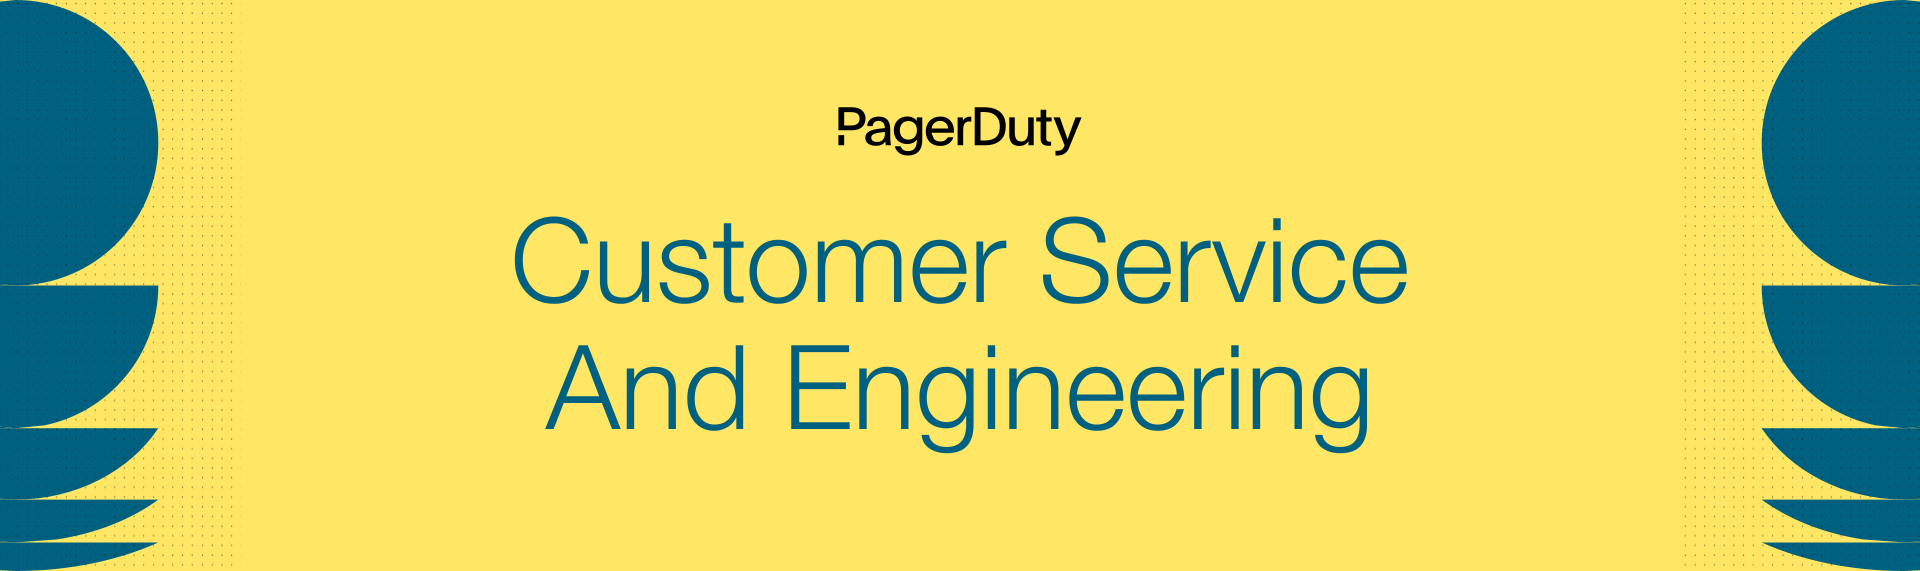 Customer Service and Engineering